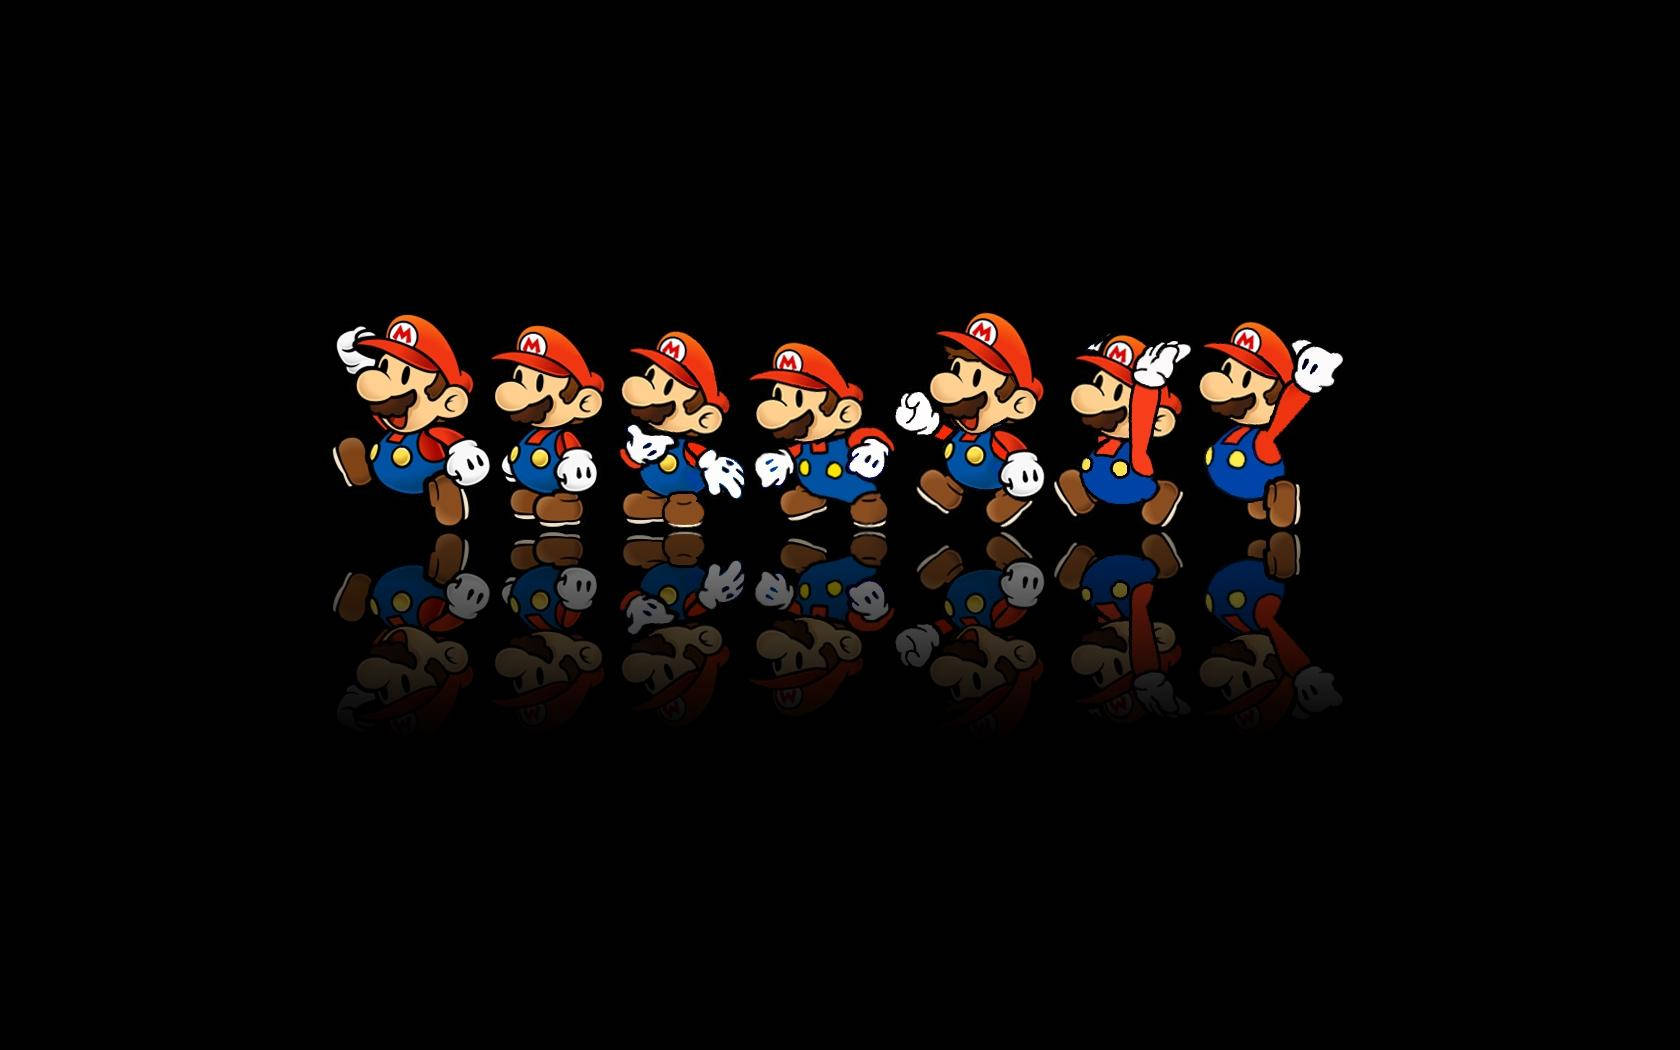 Mario Clone From Video Game Super Mario Bros Wallpaper